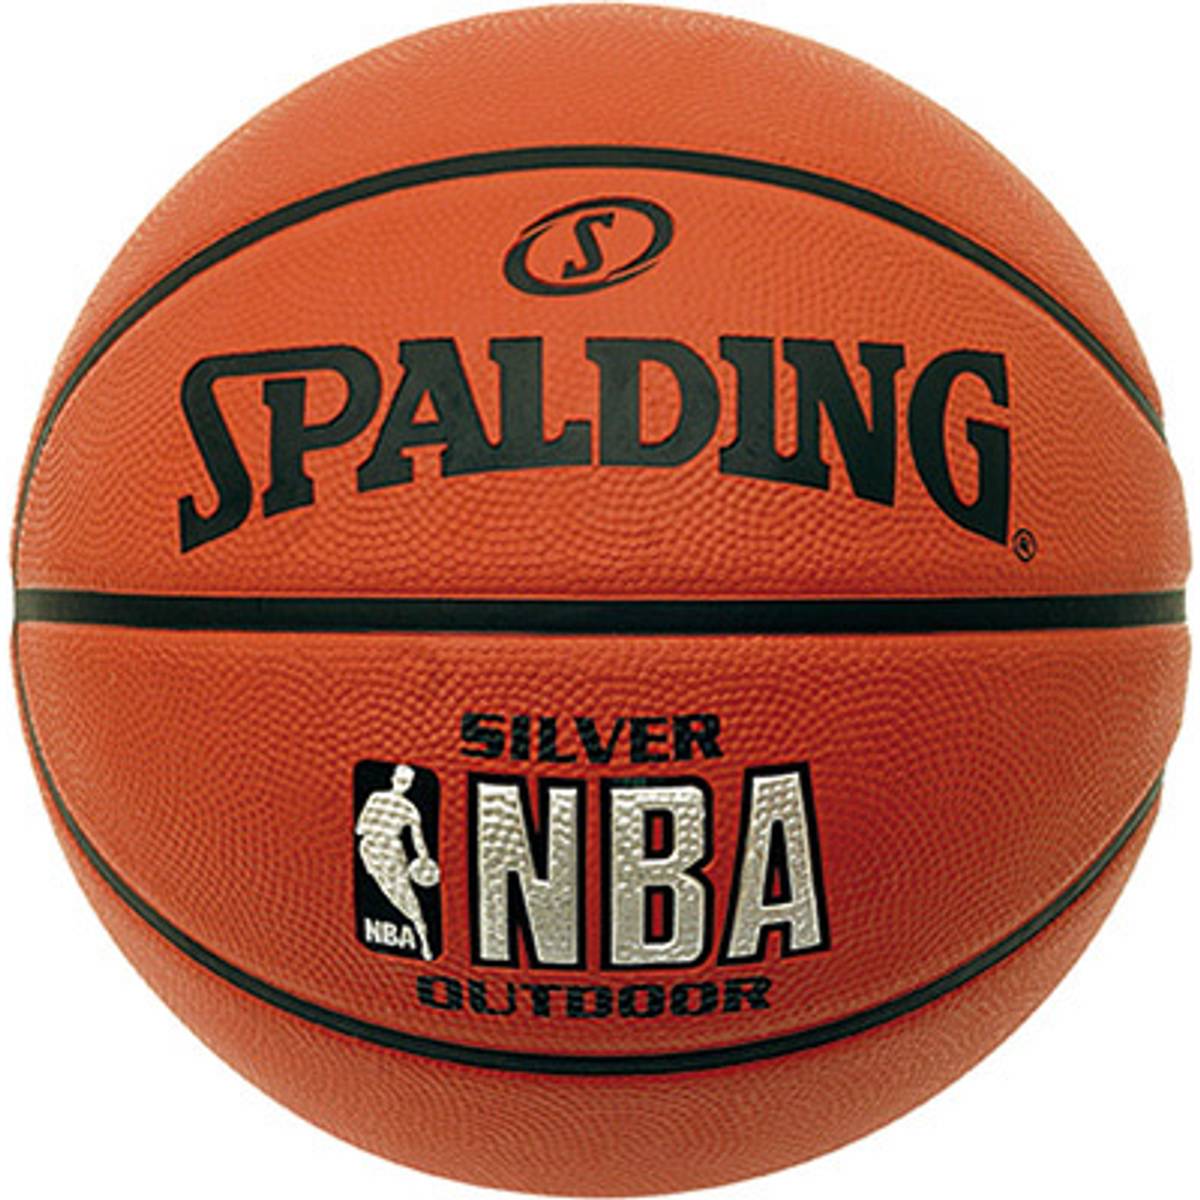 Basketboll (400+ produkter) hos PriceRunner • Se lägsta pris nu »